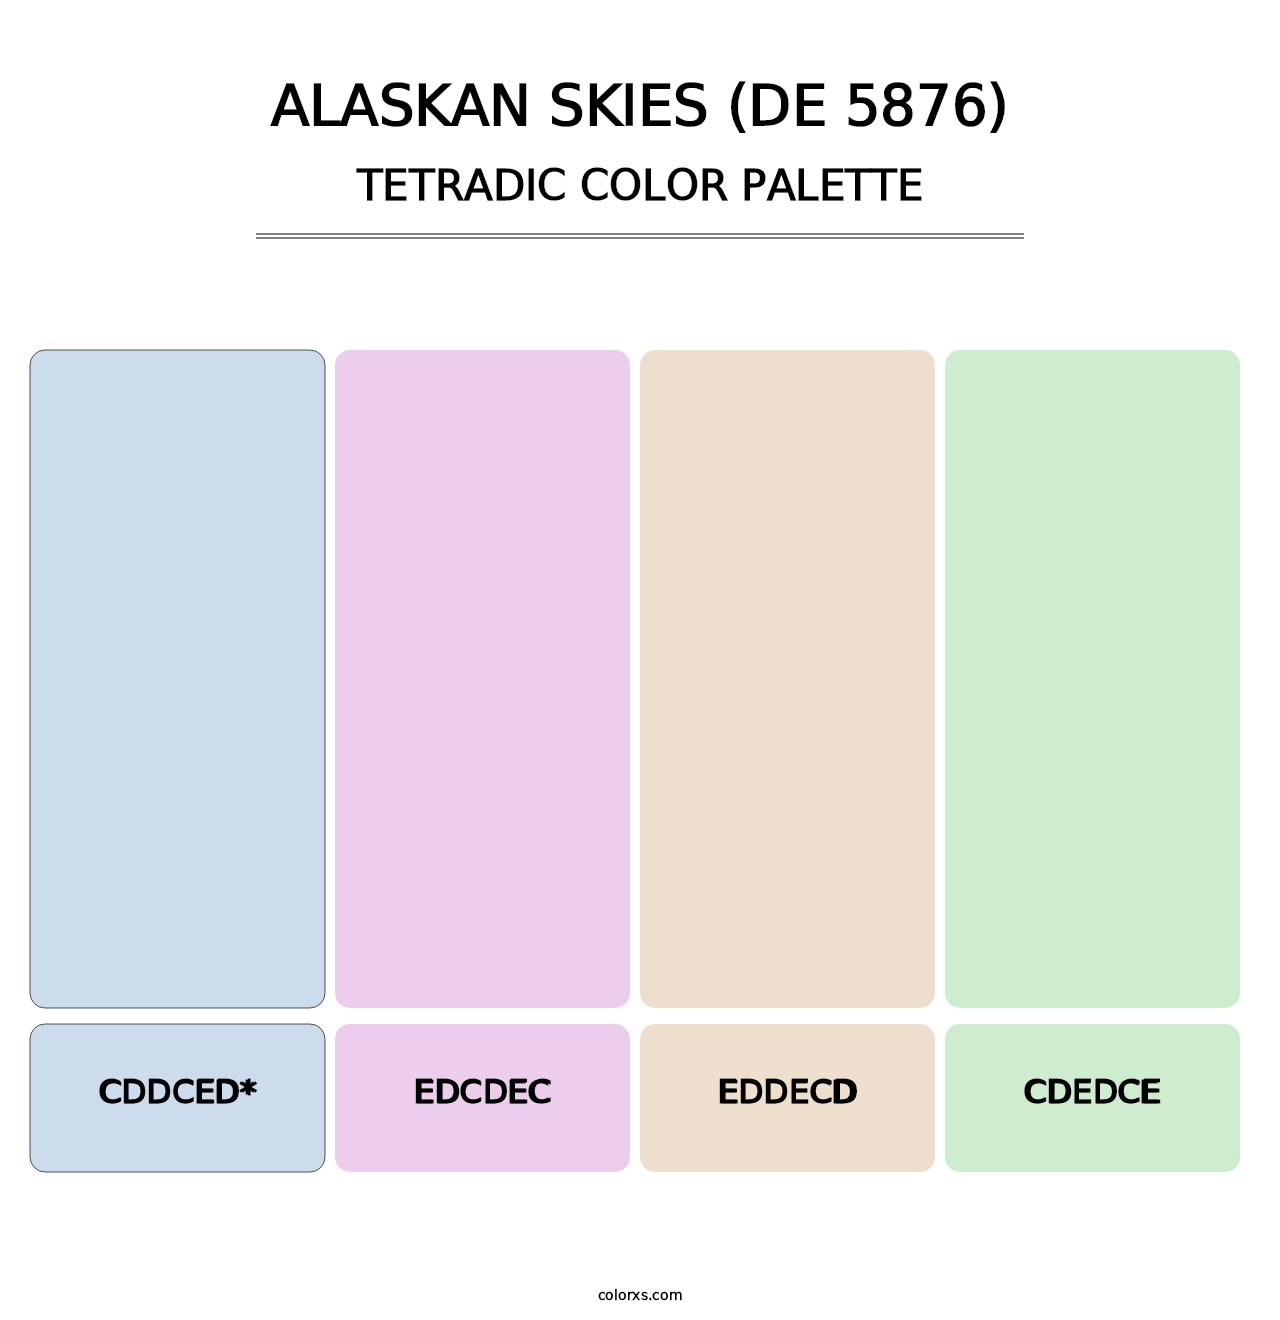 Alaskan Skies (DE 5876) - Tetradic Color Palette